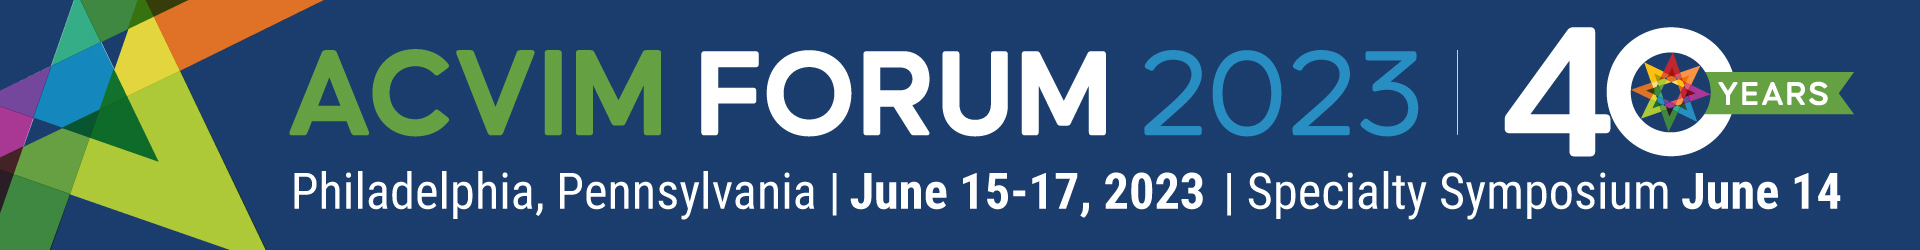 2023 ACVIM Forum Event Banner